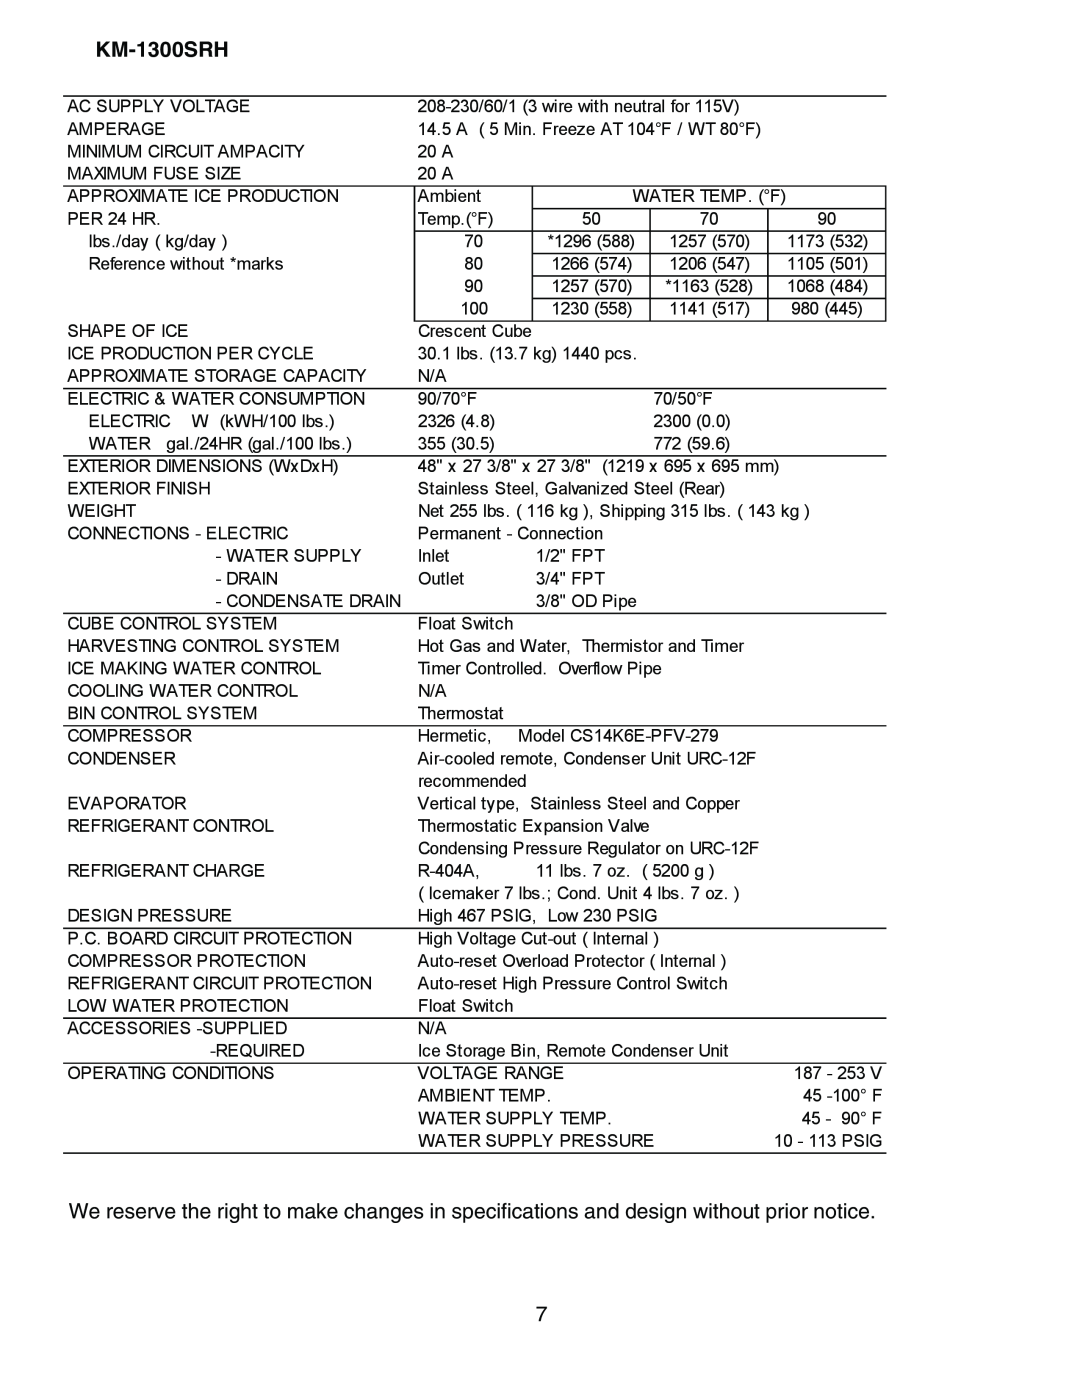 Hoshizaki KM-1300SWH3, KM-1300SAH3, KM-1300SRH3 service manual 